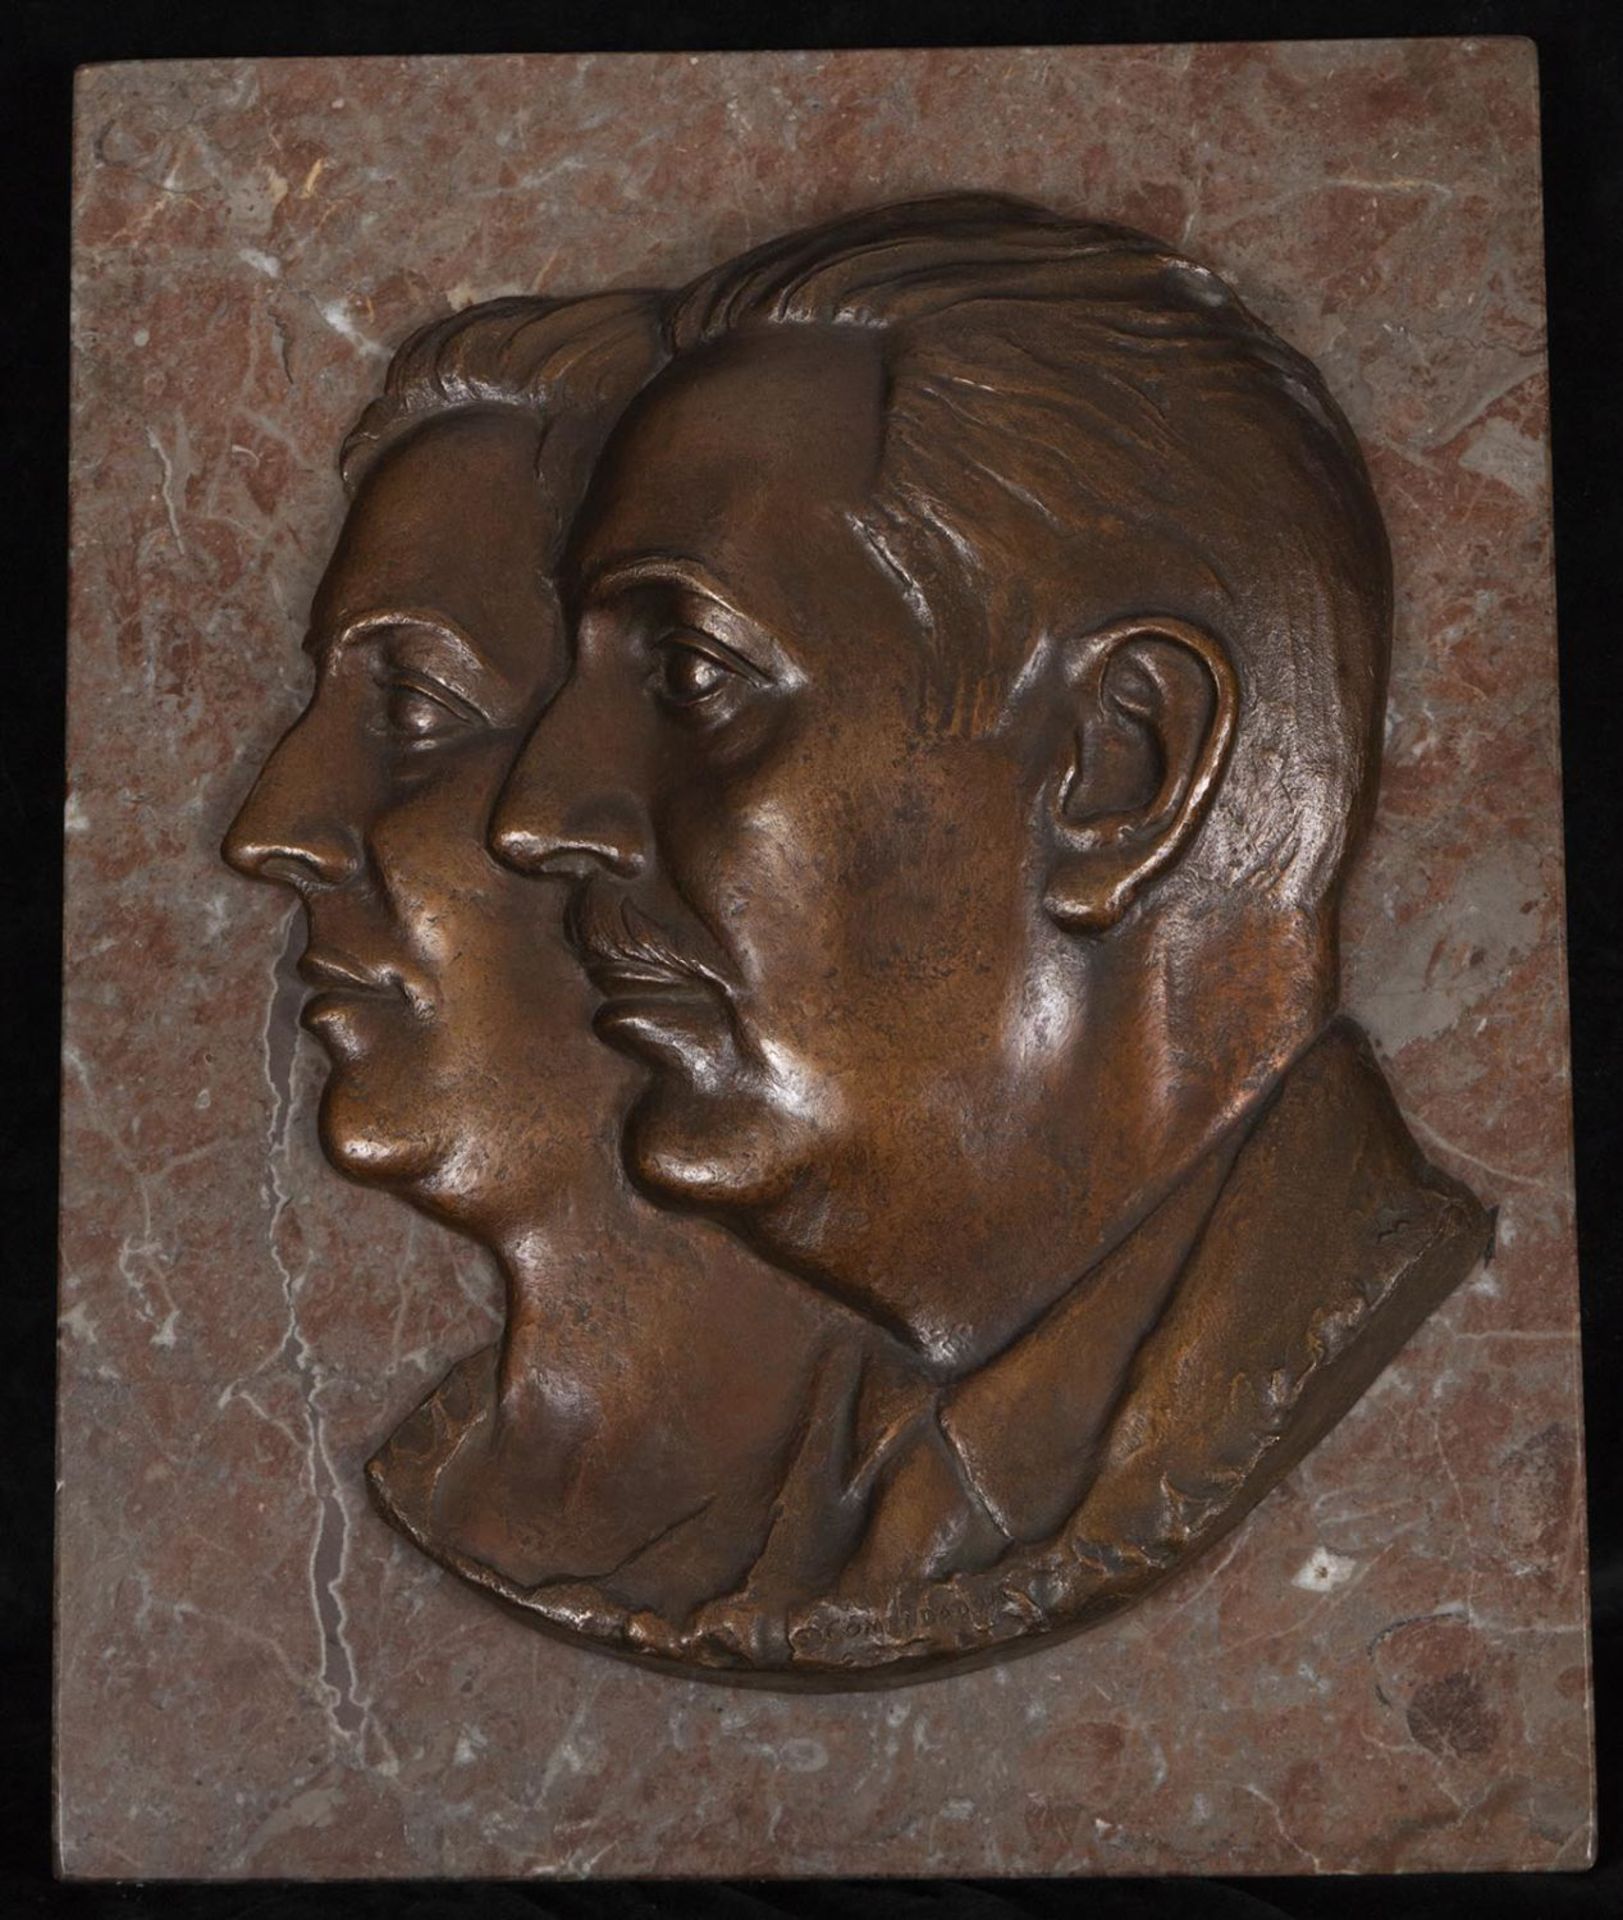 Enrique Pérez Comendador (Cáceres, 1900 – Madrid, 1981), "Fathers of the Artist in Oval" on marble. 